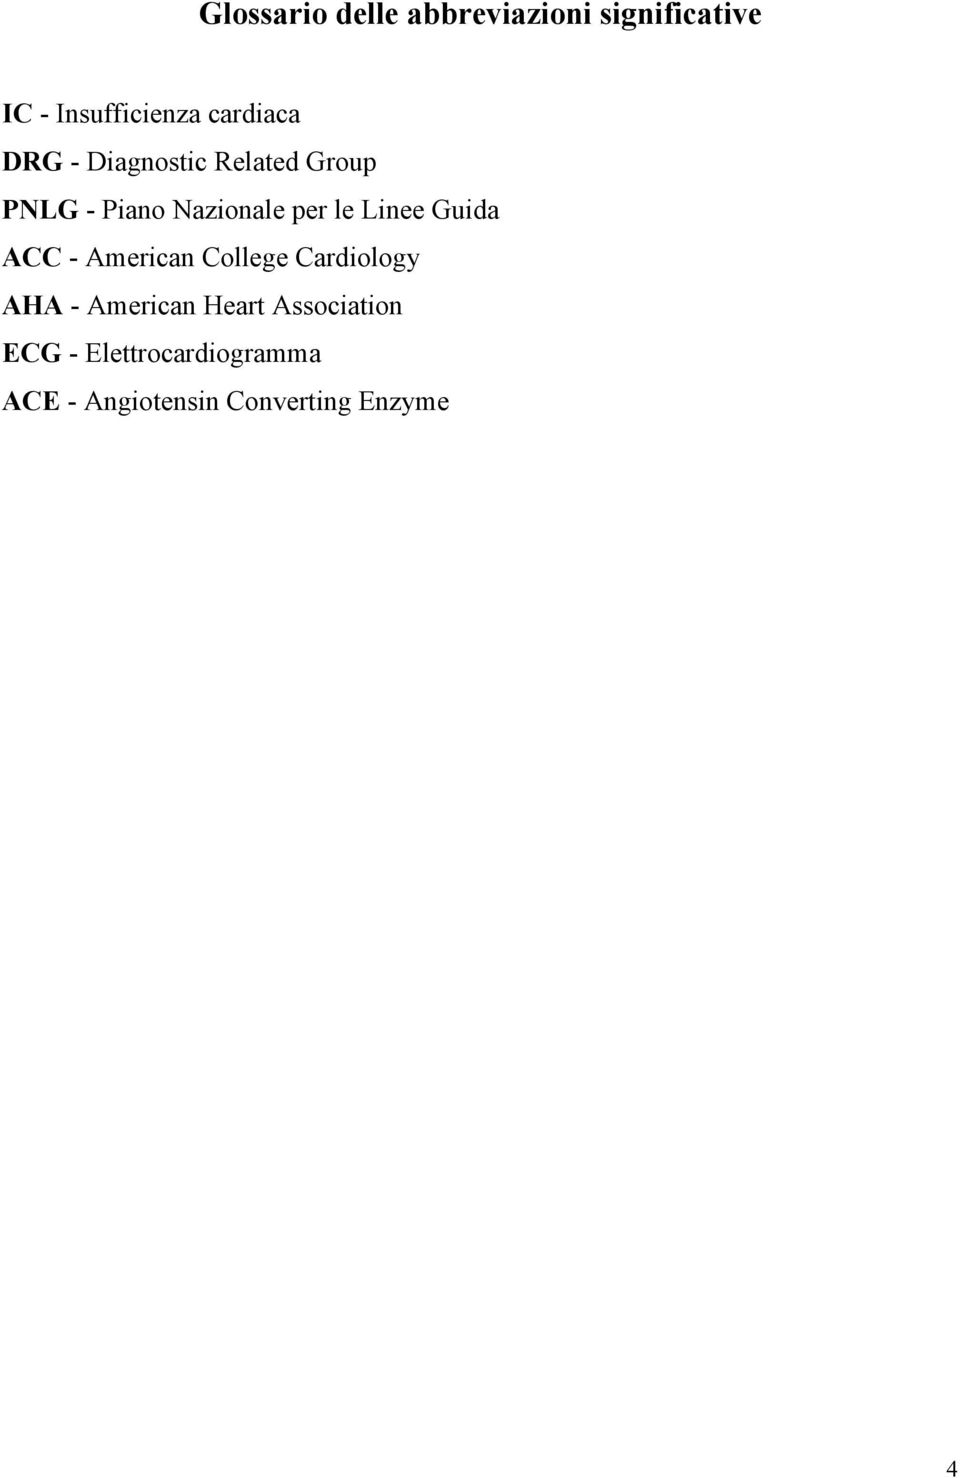 le Linee Guida ACC - American College Cardiology AHA - American